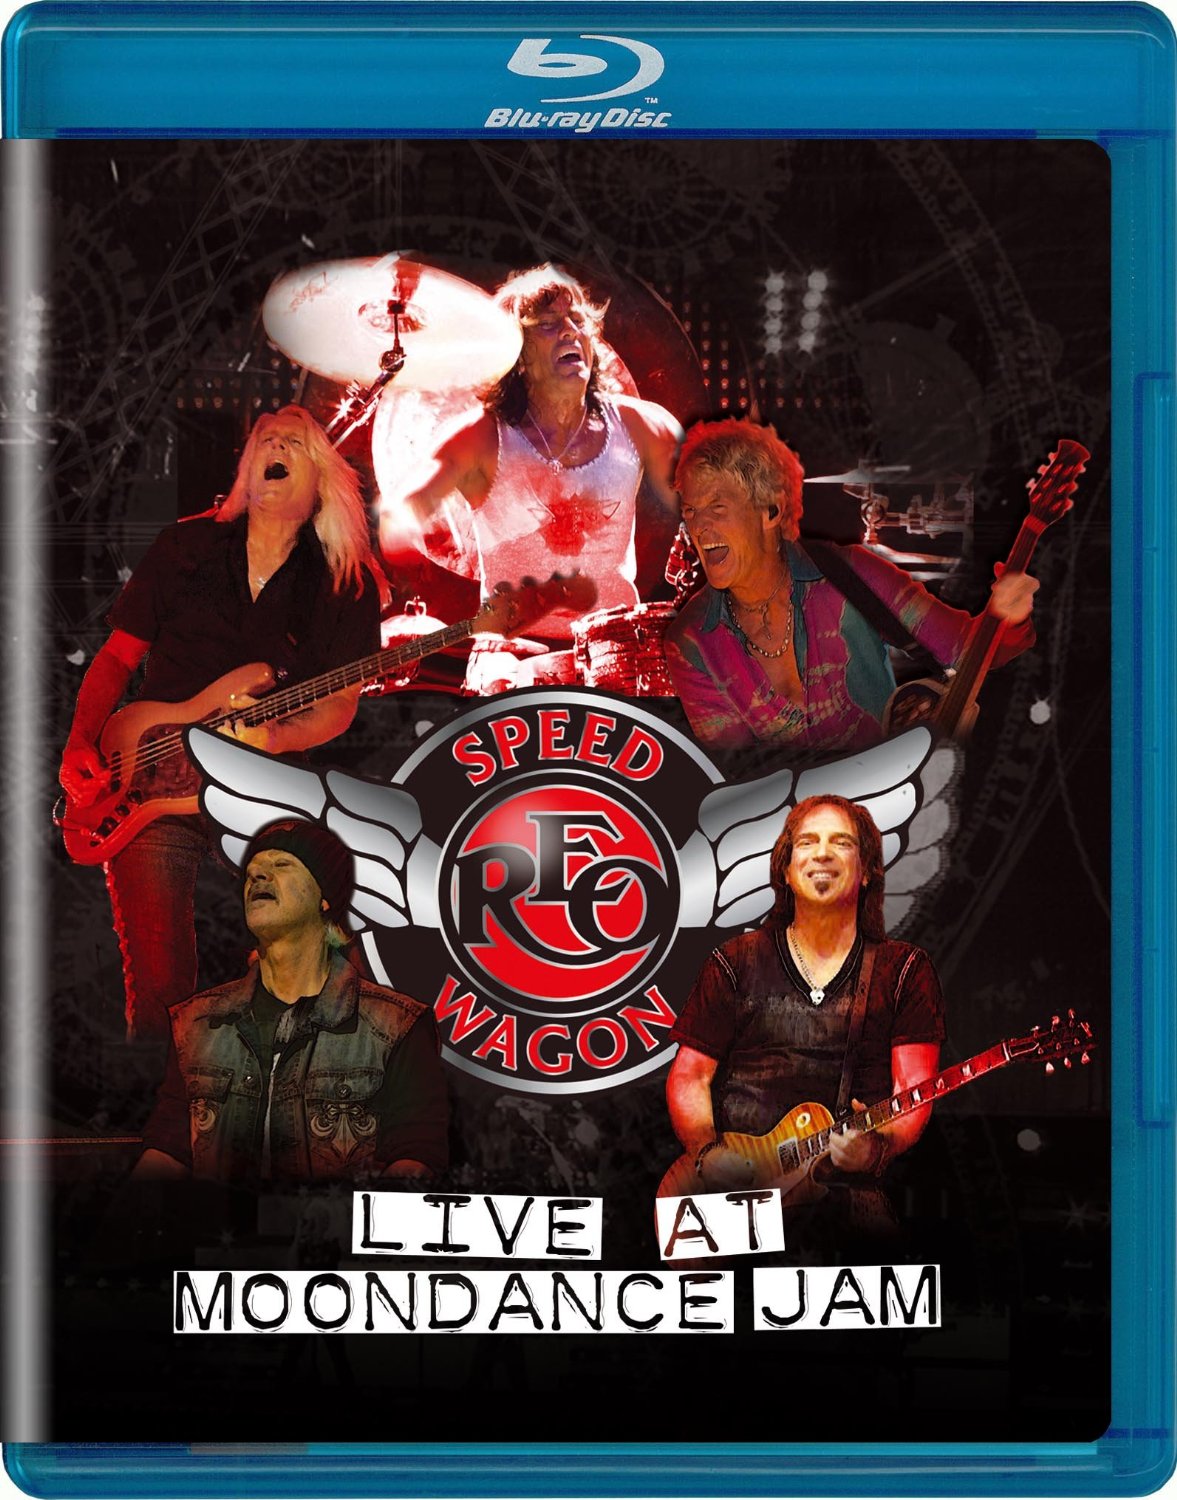 REO Speedwagon - Live at Moondance Jam - Blu Ray